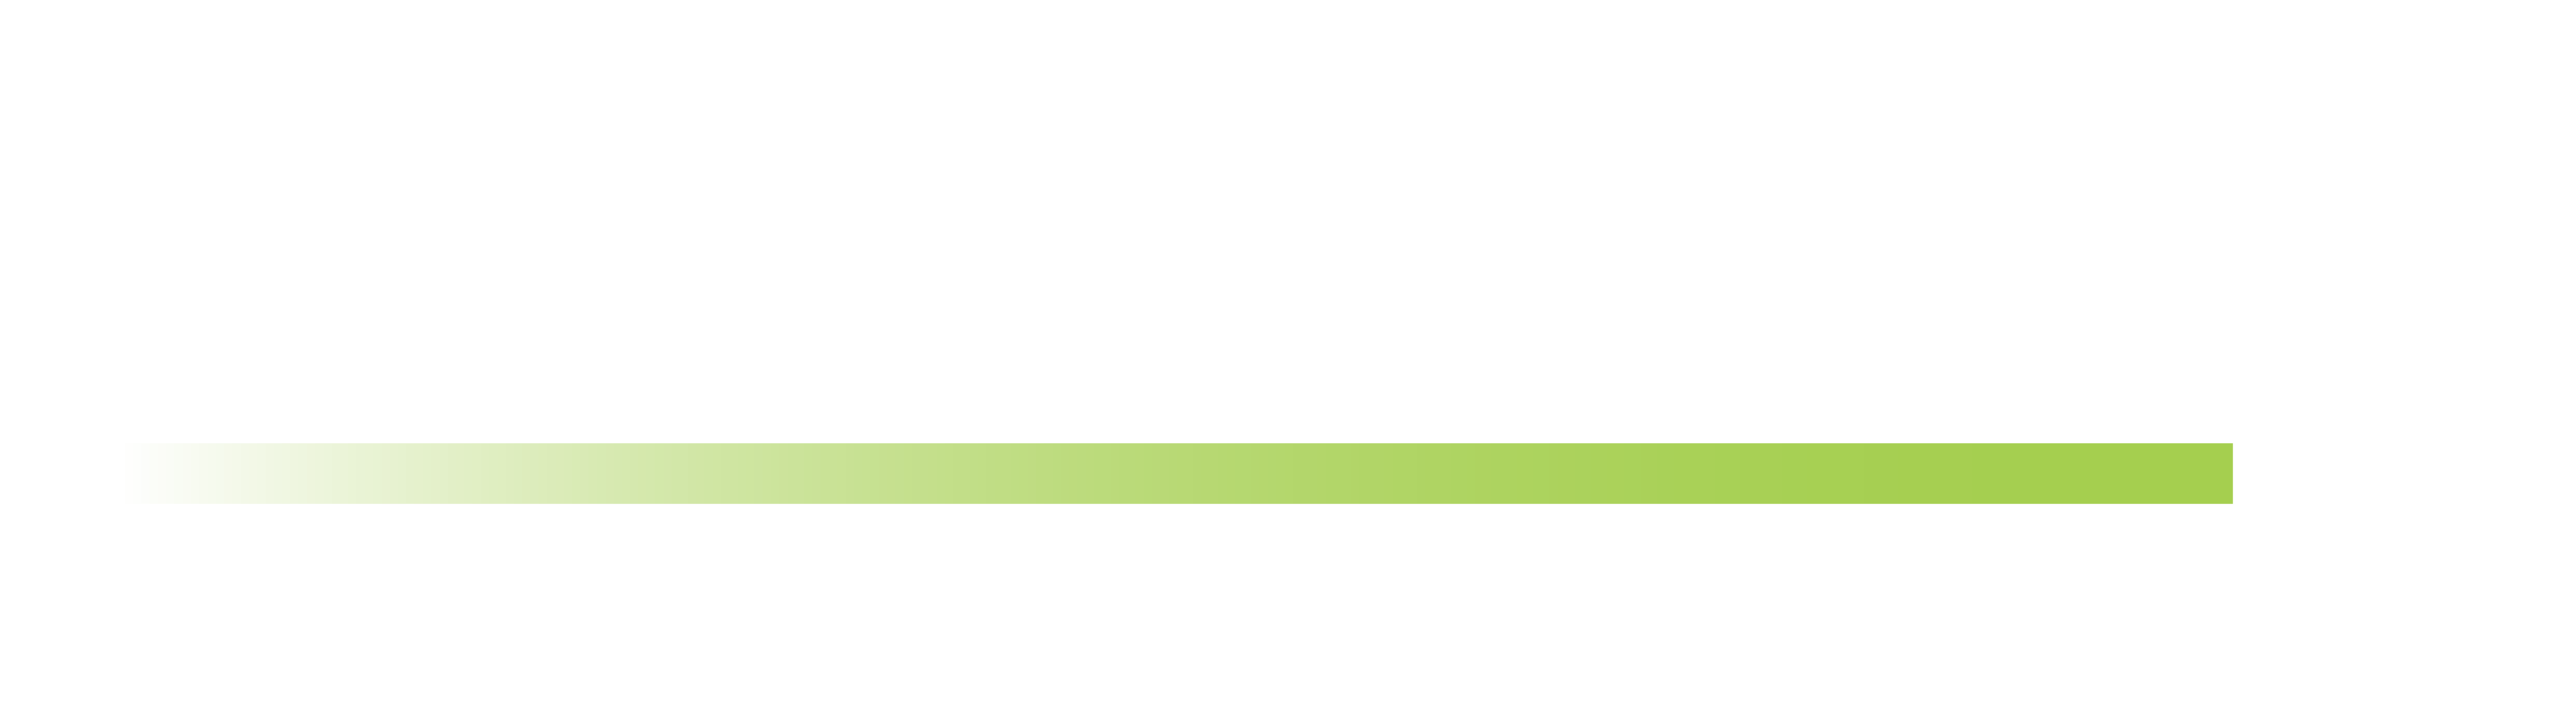 City of Phoneix Bus Rapid Transit Program